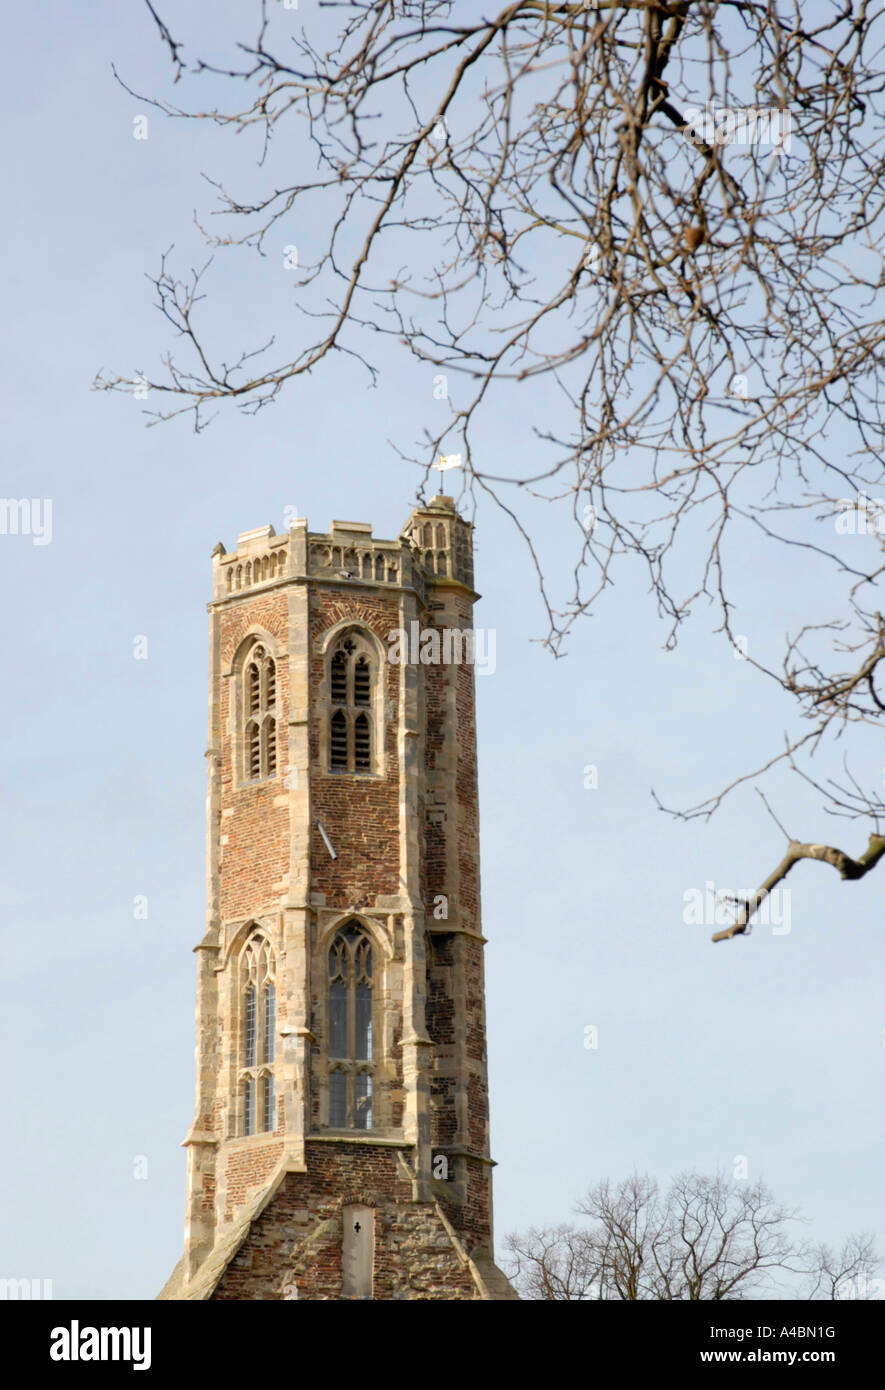 Greyfriars tower, King's Lynn, Norfolk, Royaume-Uni. Banque D'Images